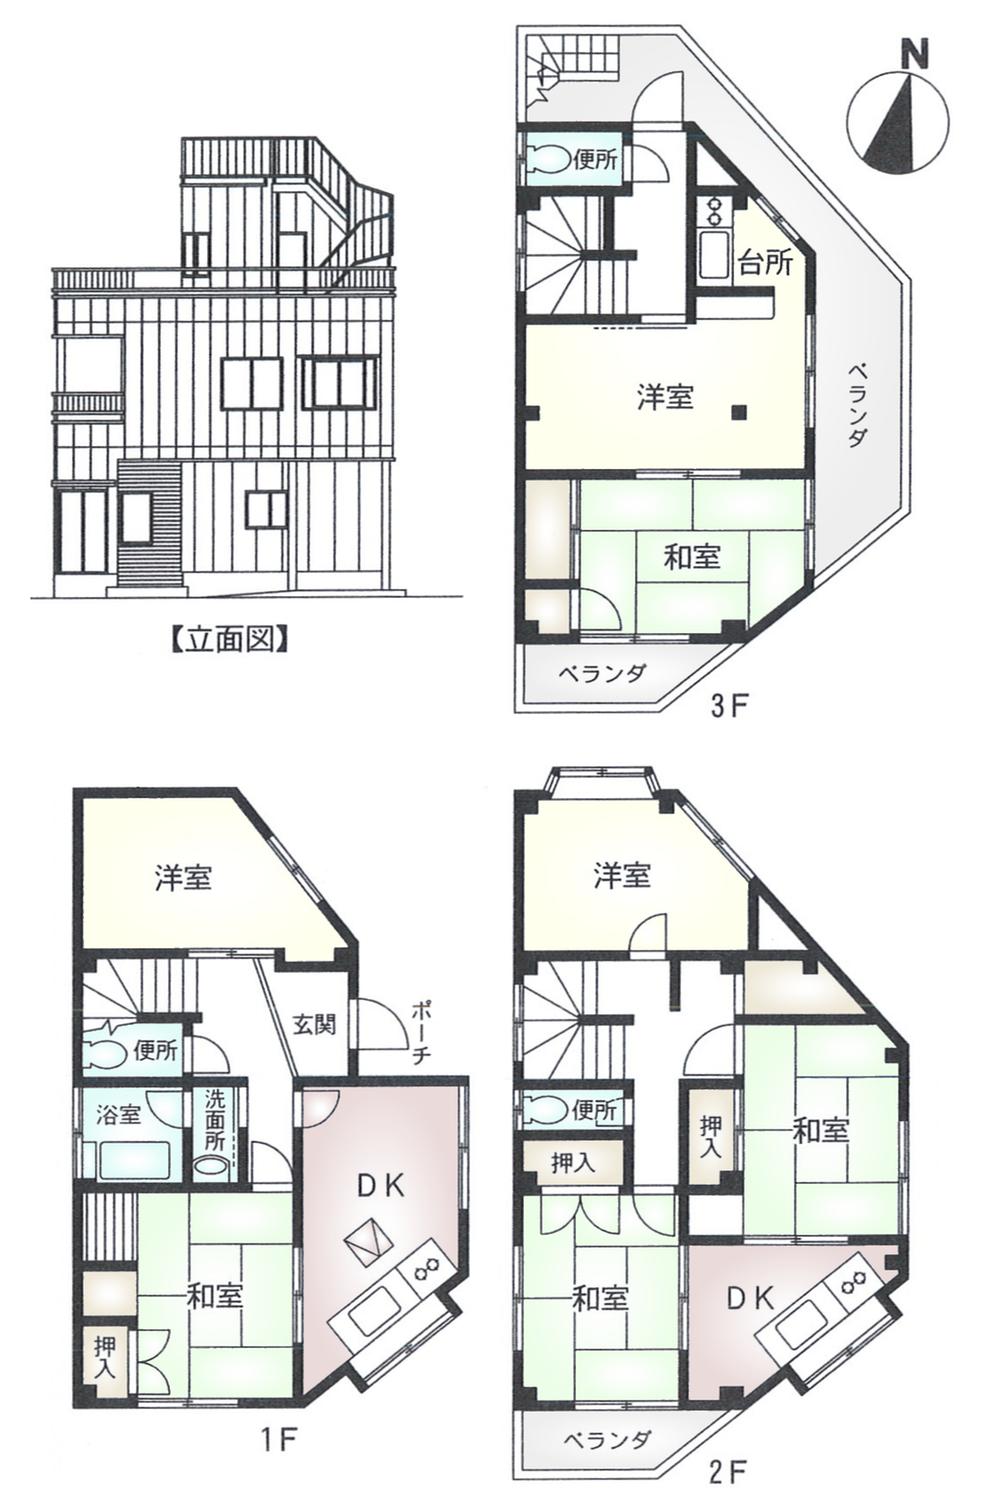 Floor plan. 19,800,000 yen, 5LDDKK, Land area 75.97 sq m , Building area 121.4 sq m